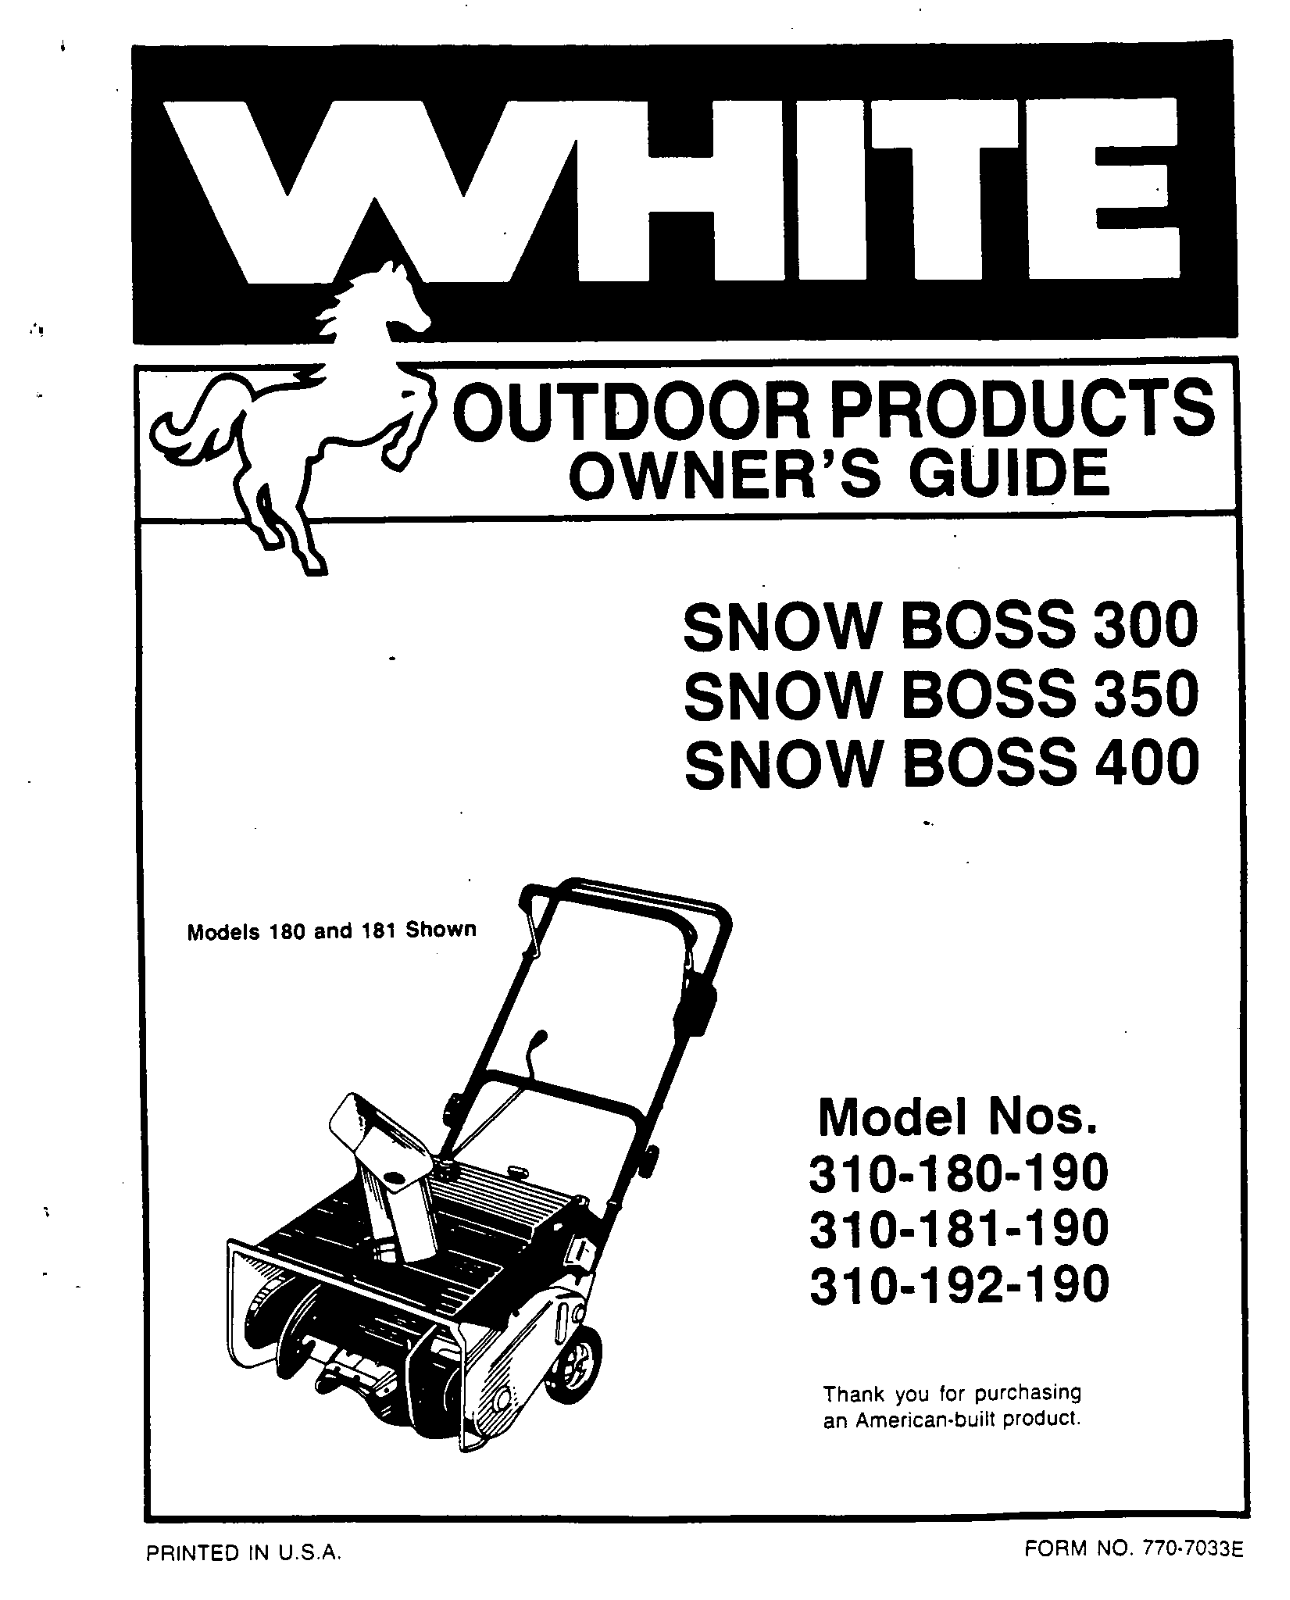 white SNOW BOSS 350, SNOW BOSS 300, SNOW BOSS 400 owners Manual